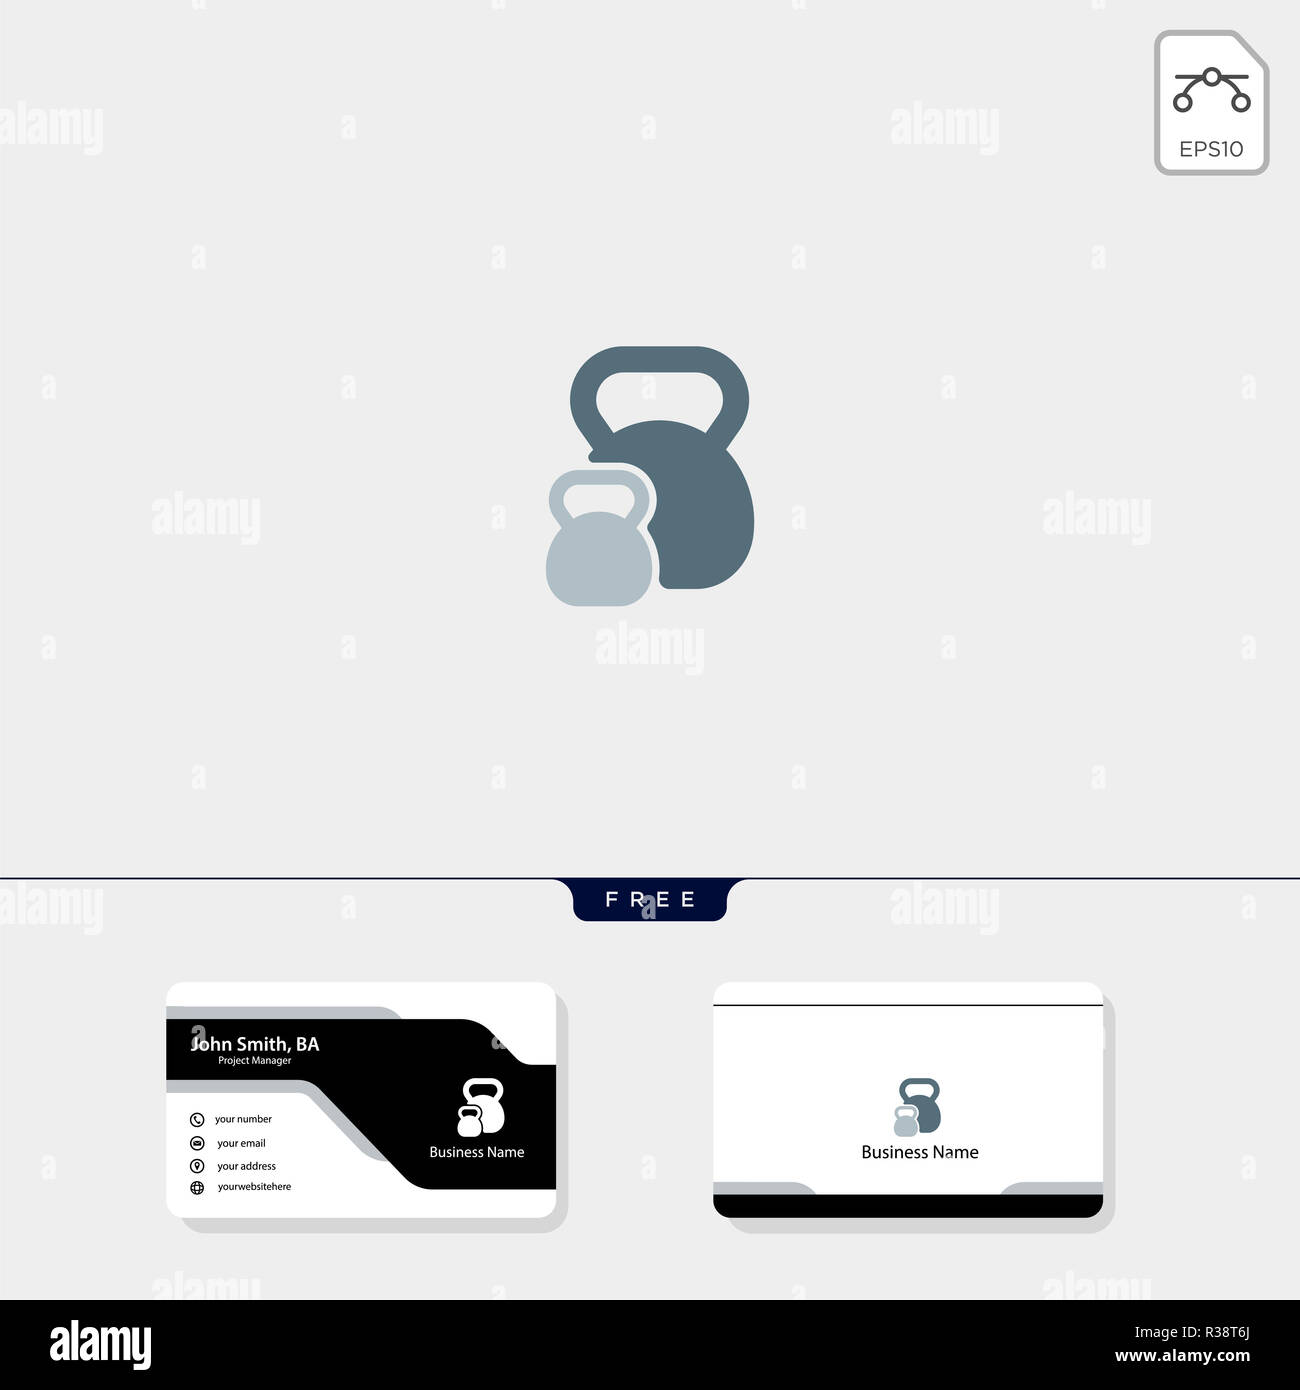 kettlebell, fitness logo template vector illustration, free business card design Stock Photo